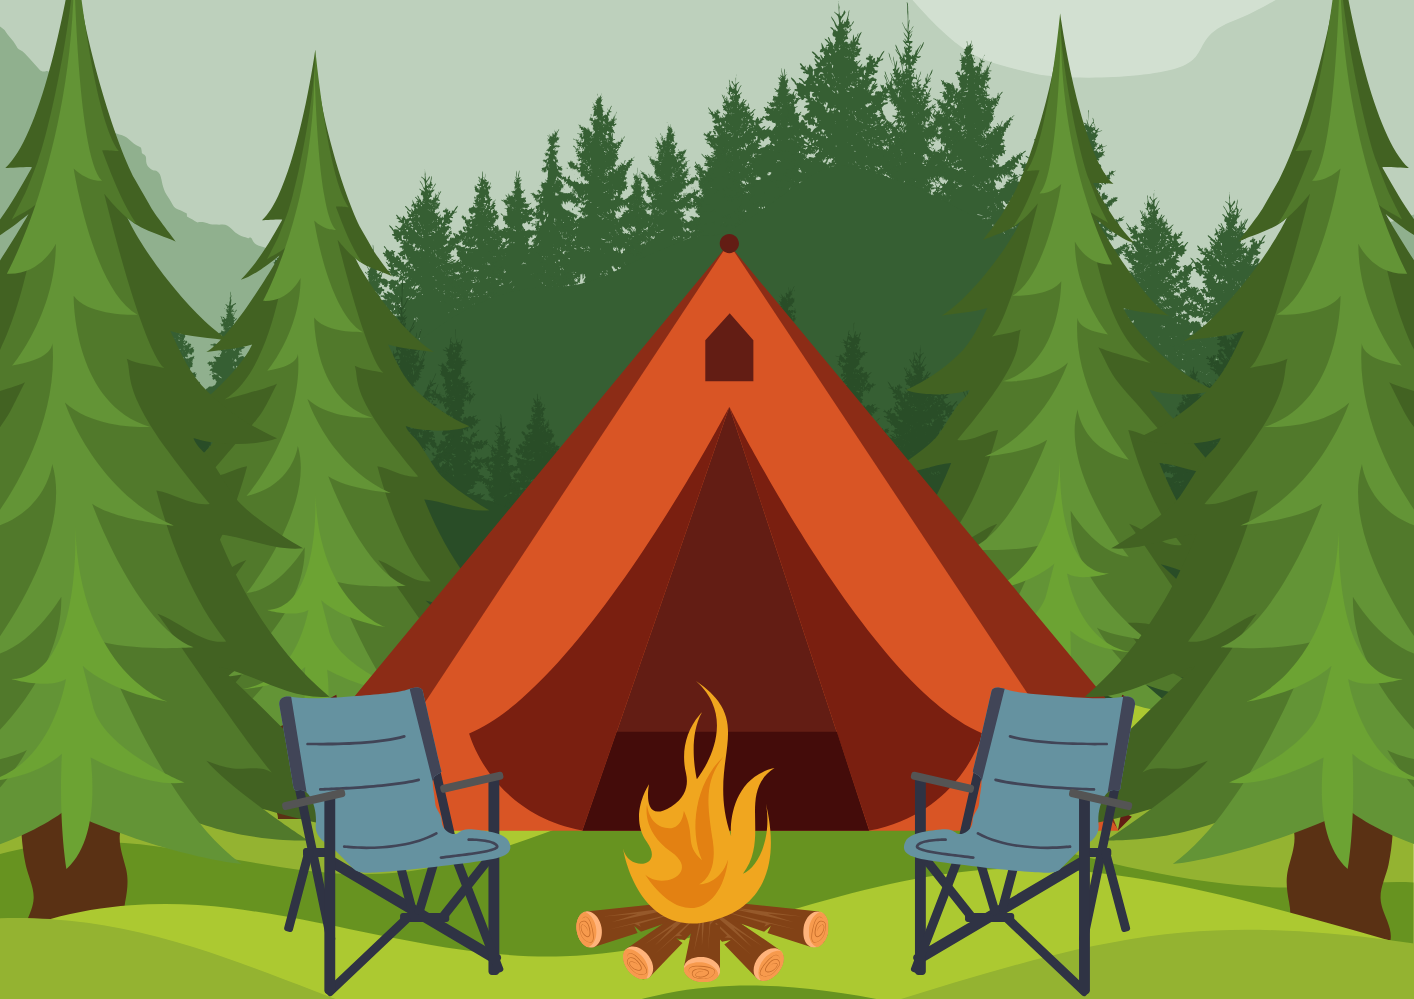 Camp Firelight Vacation Bible School